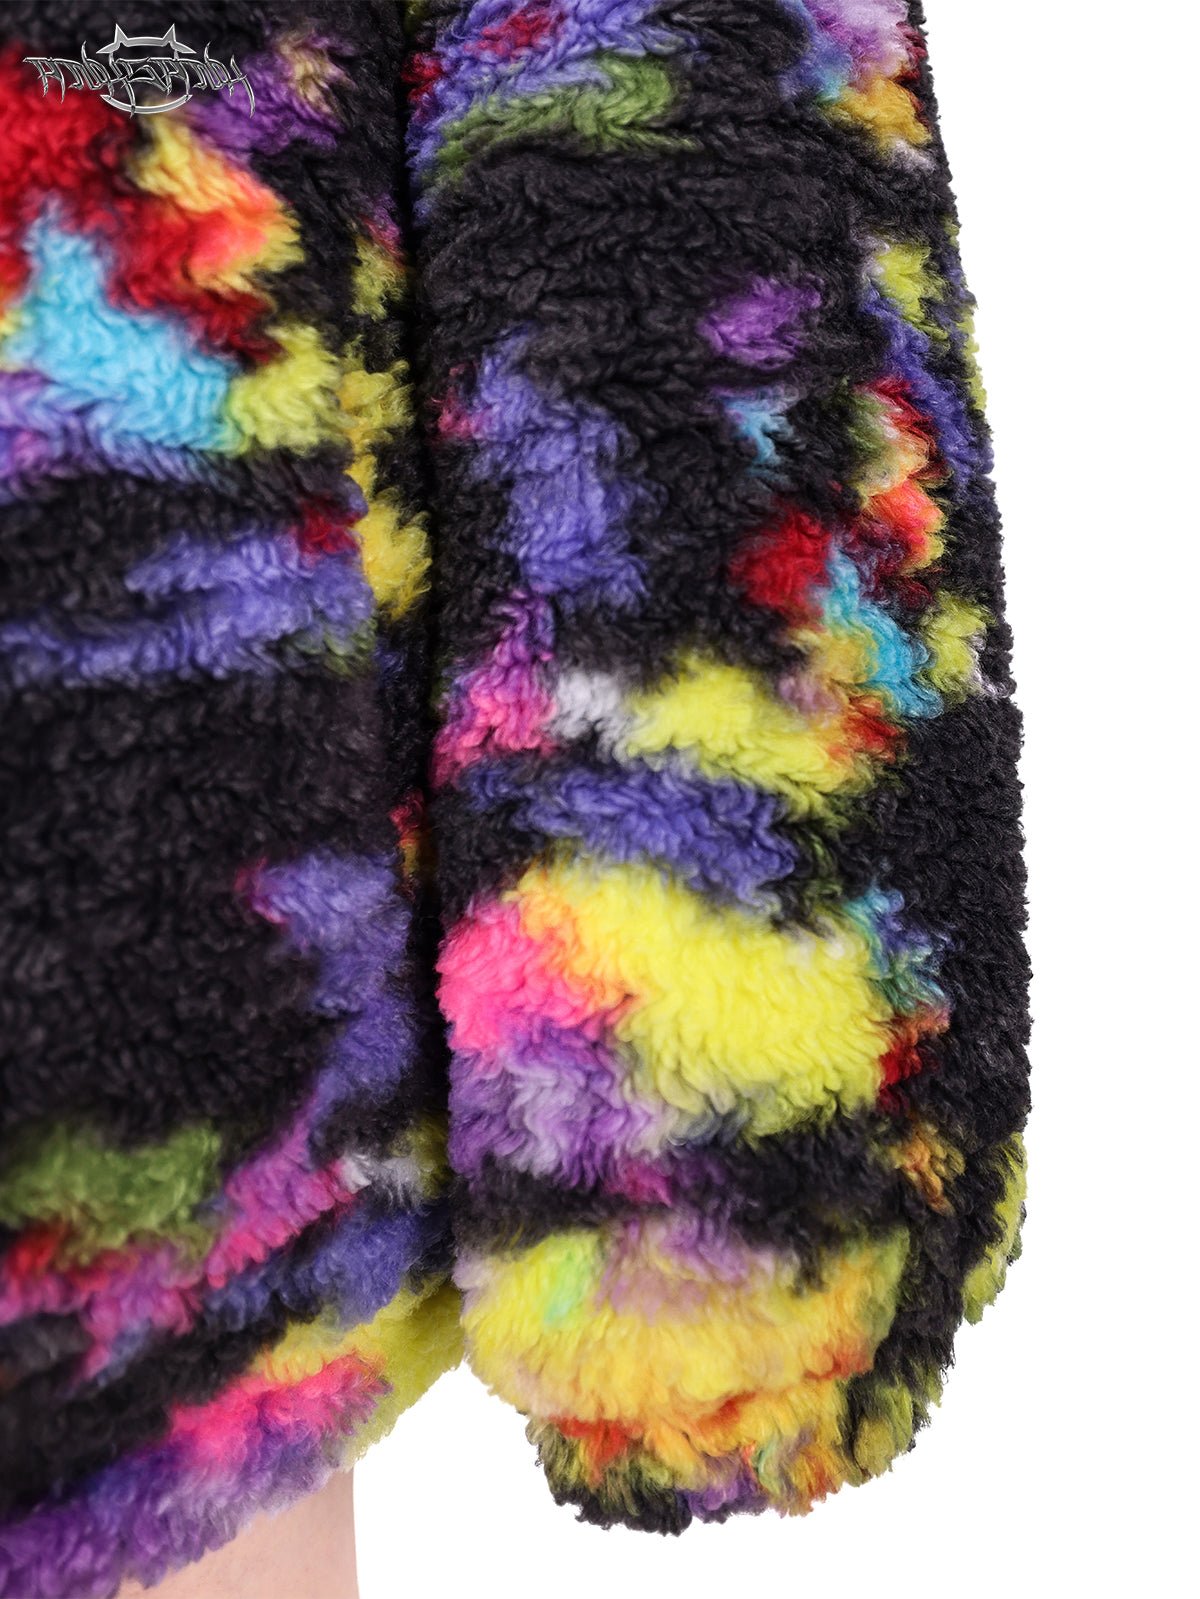 Lamb wool street rainbow color jacket with cat ears hood PIN0101